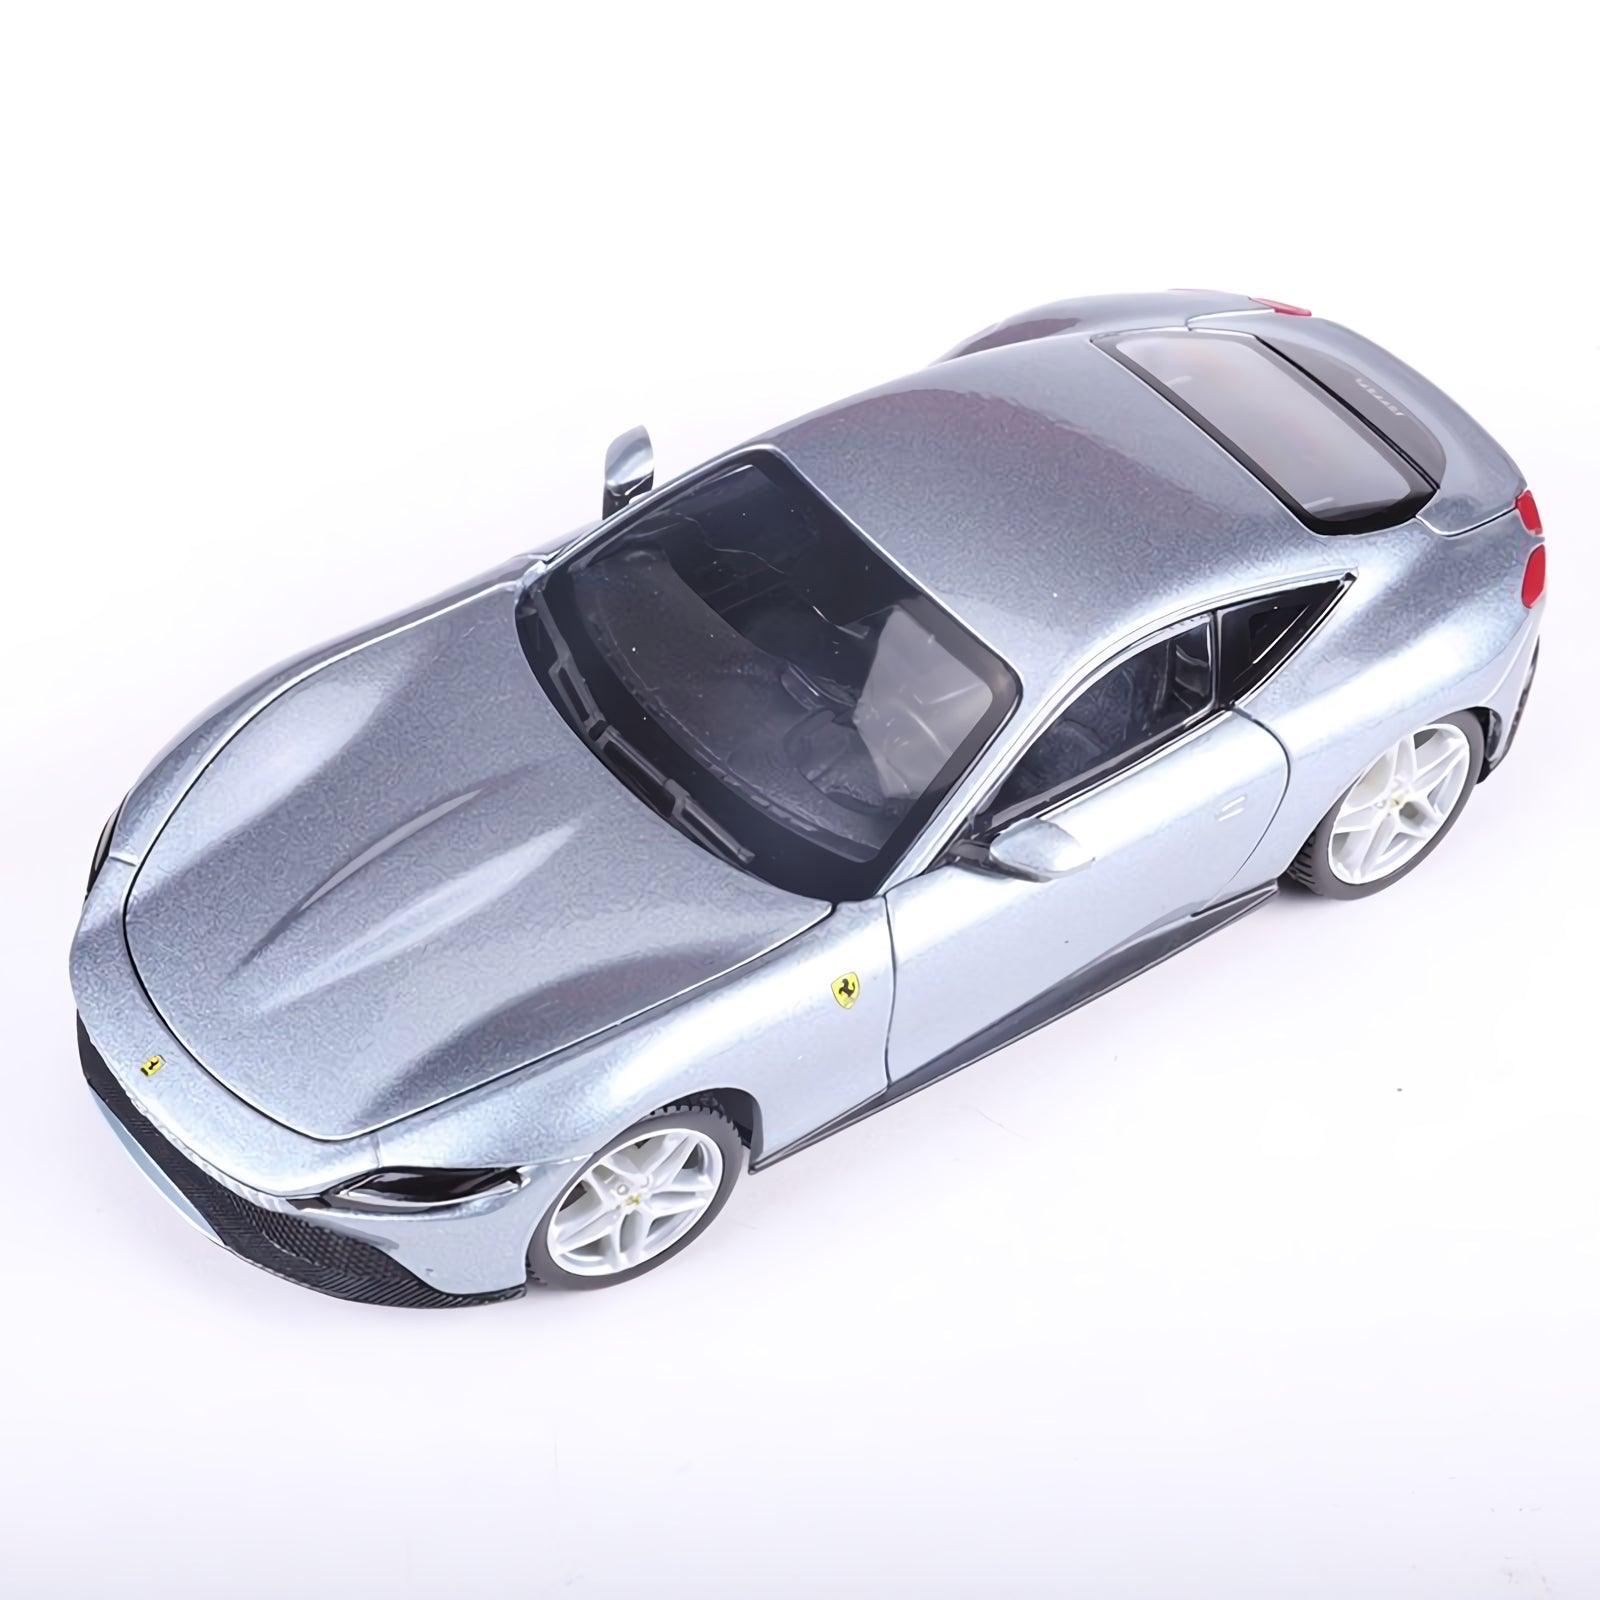 1:24 Scale Die-Cast Alloy Model Car Genuine authorization Ferrari Roma - PANSEKtoy